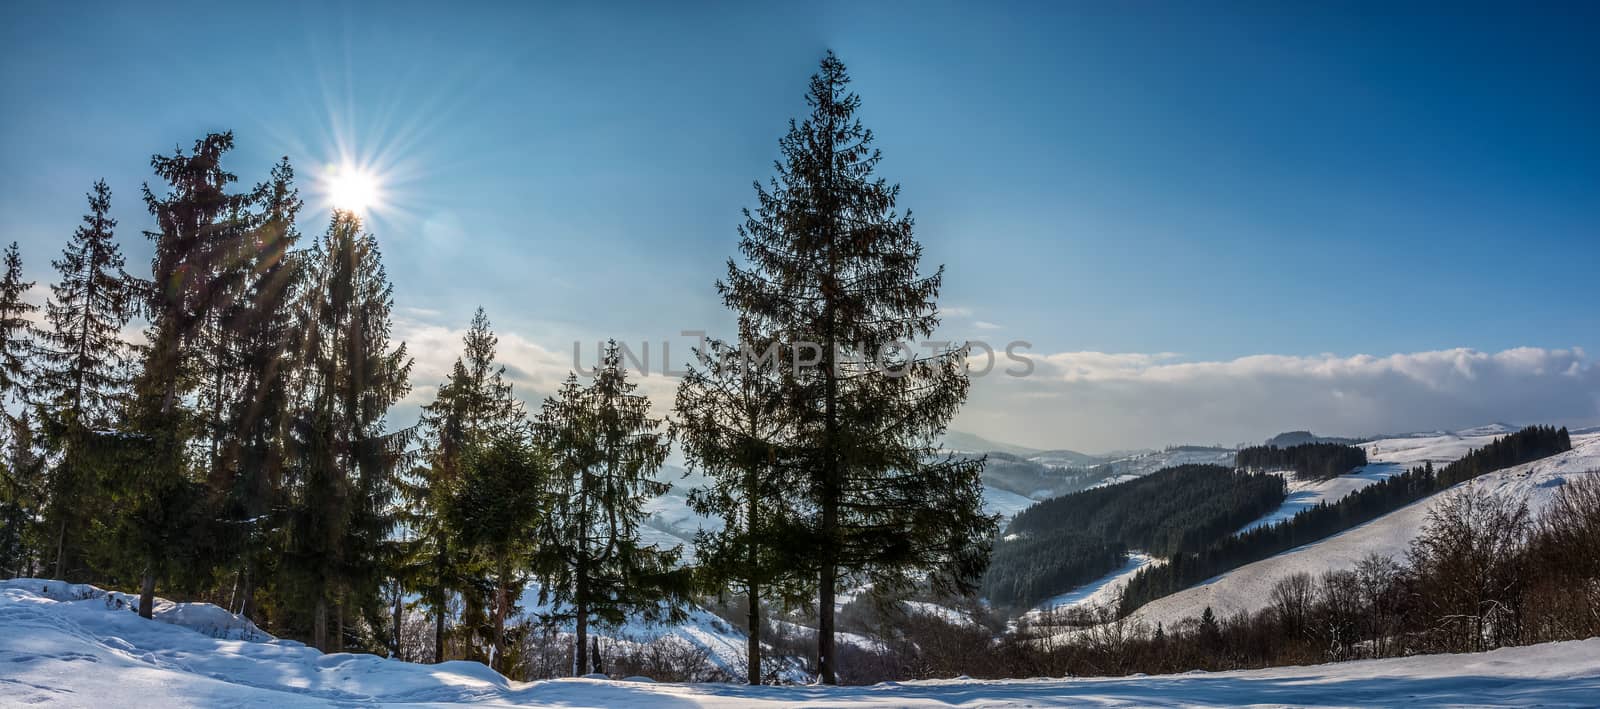 spruce forest on snowy meadow by Pellinni